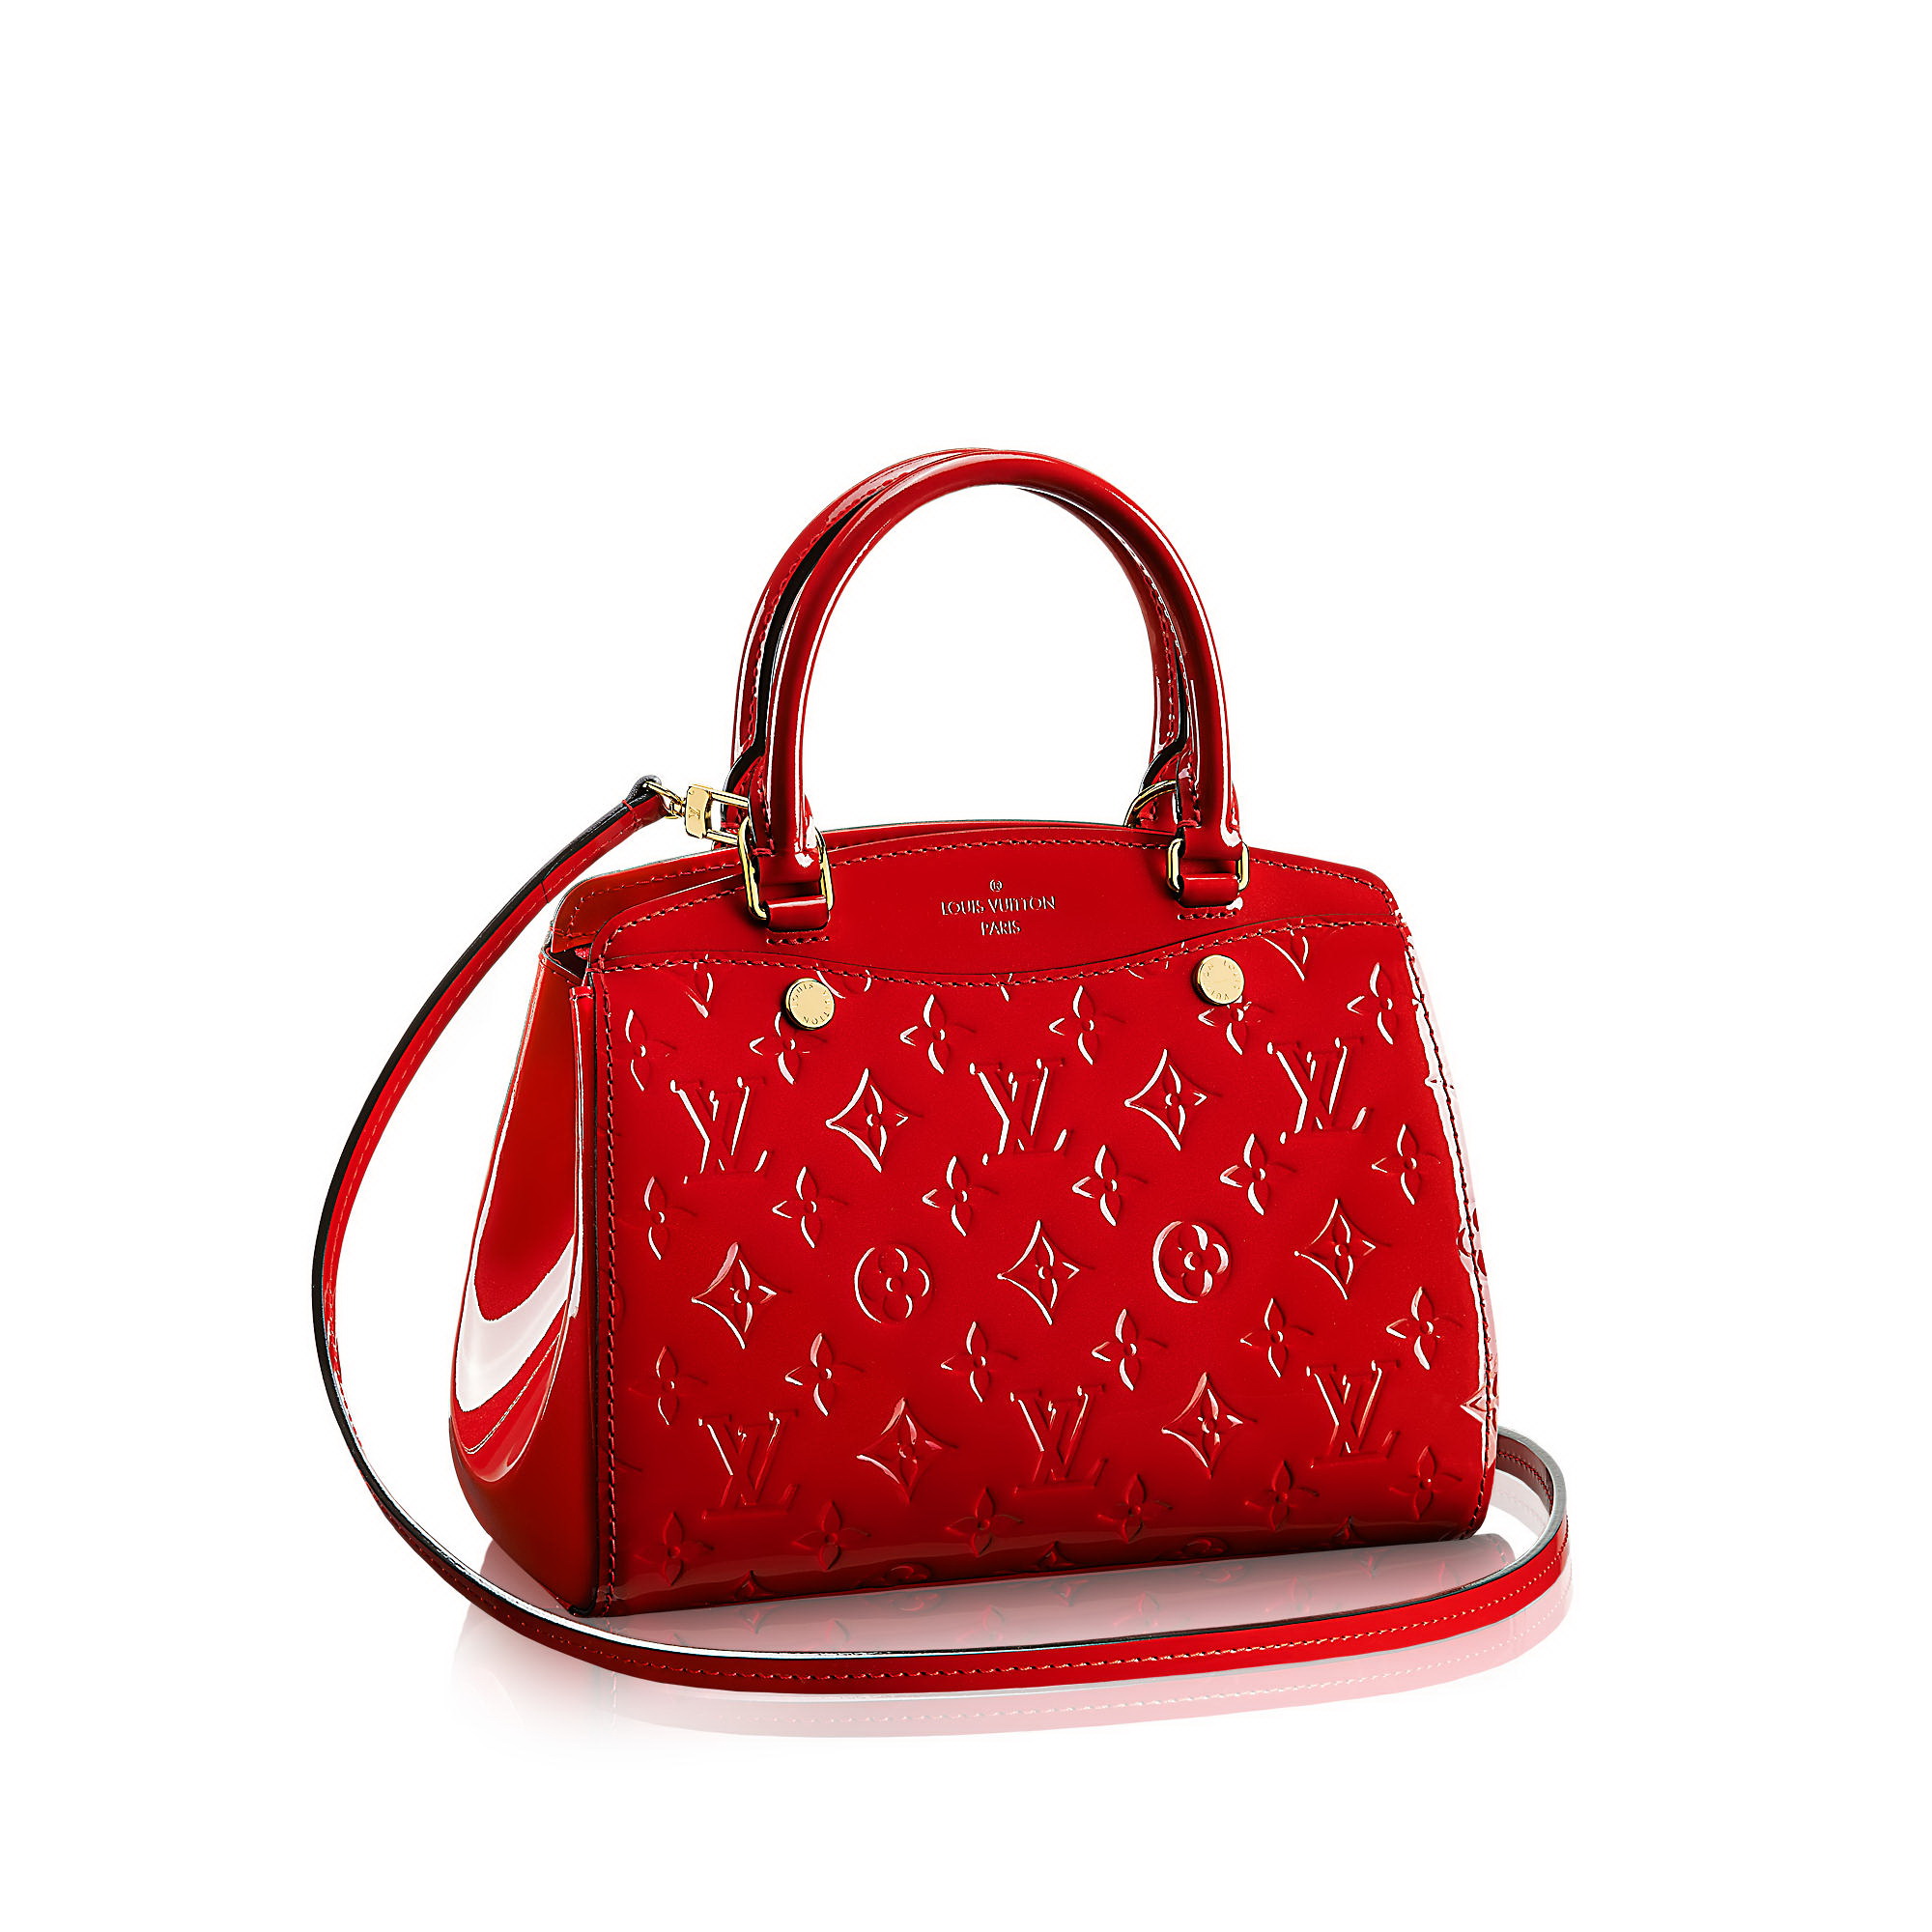 LV Red shiny leather handbag